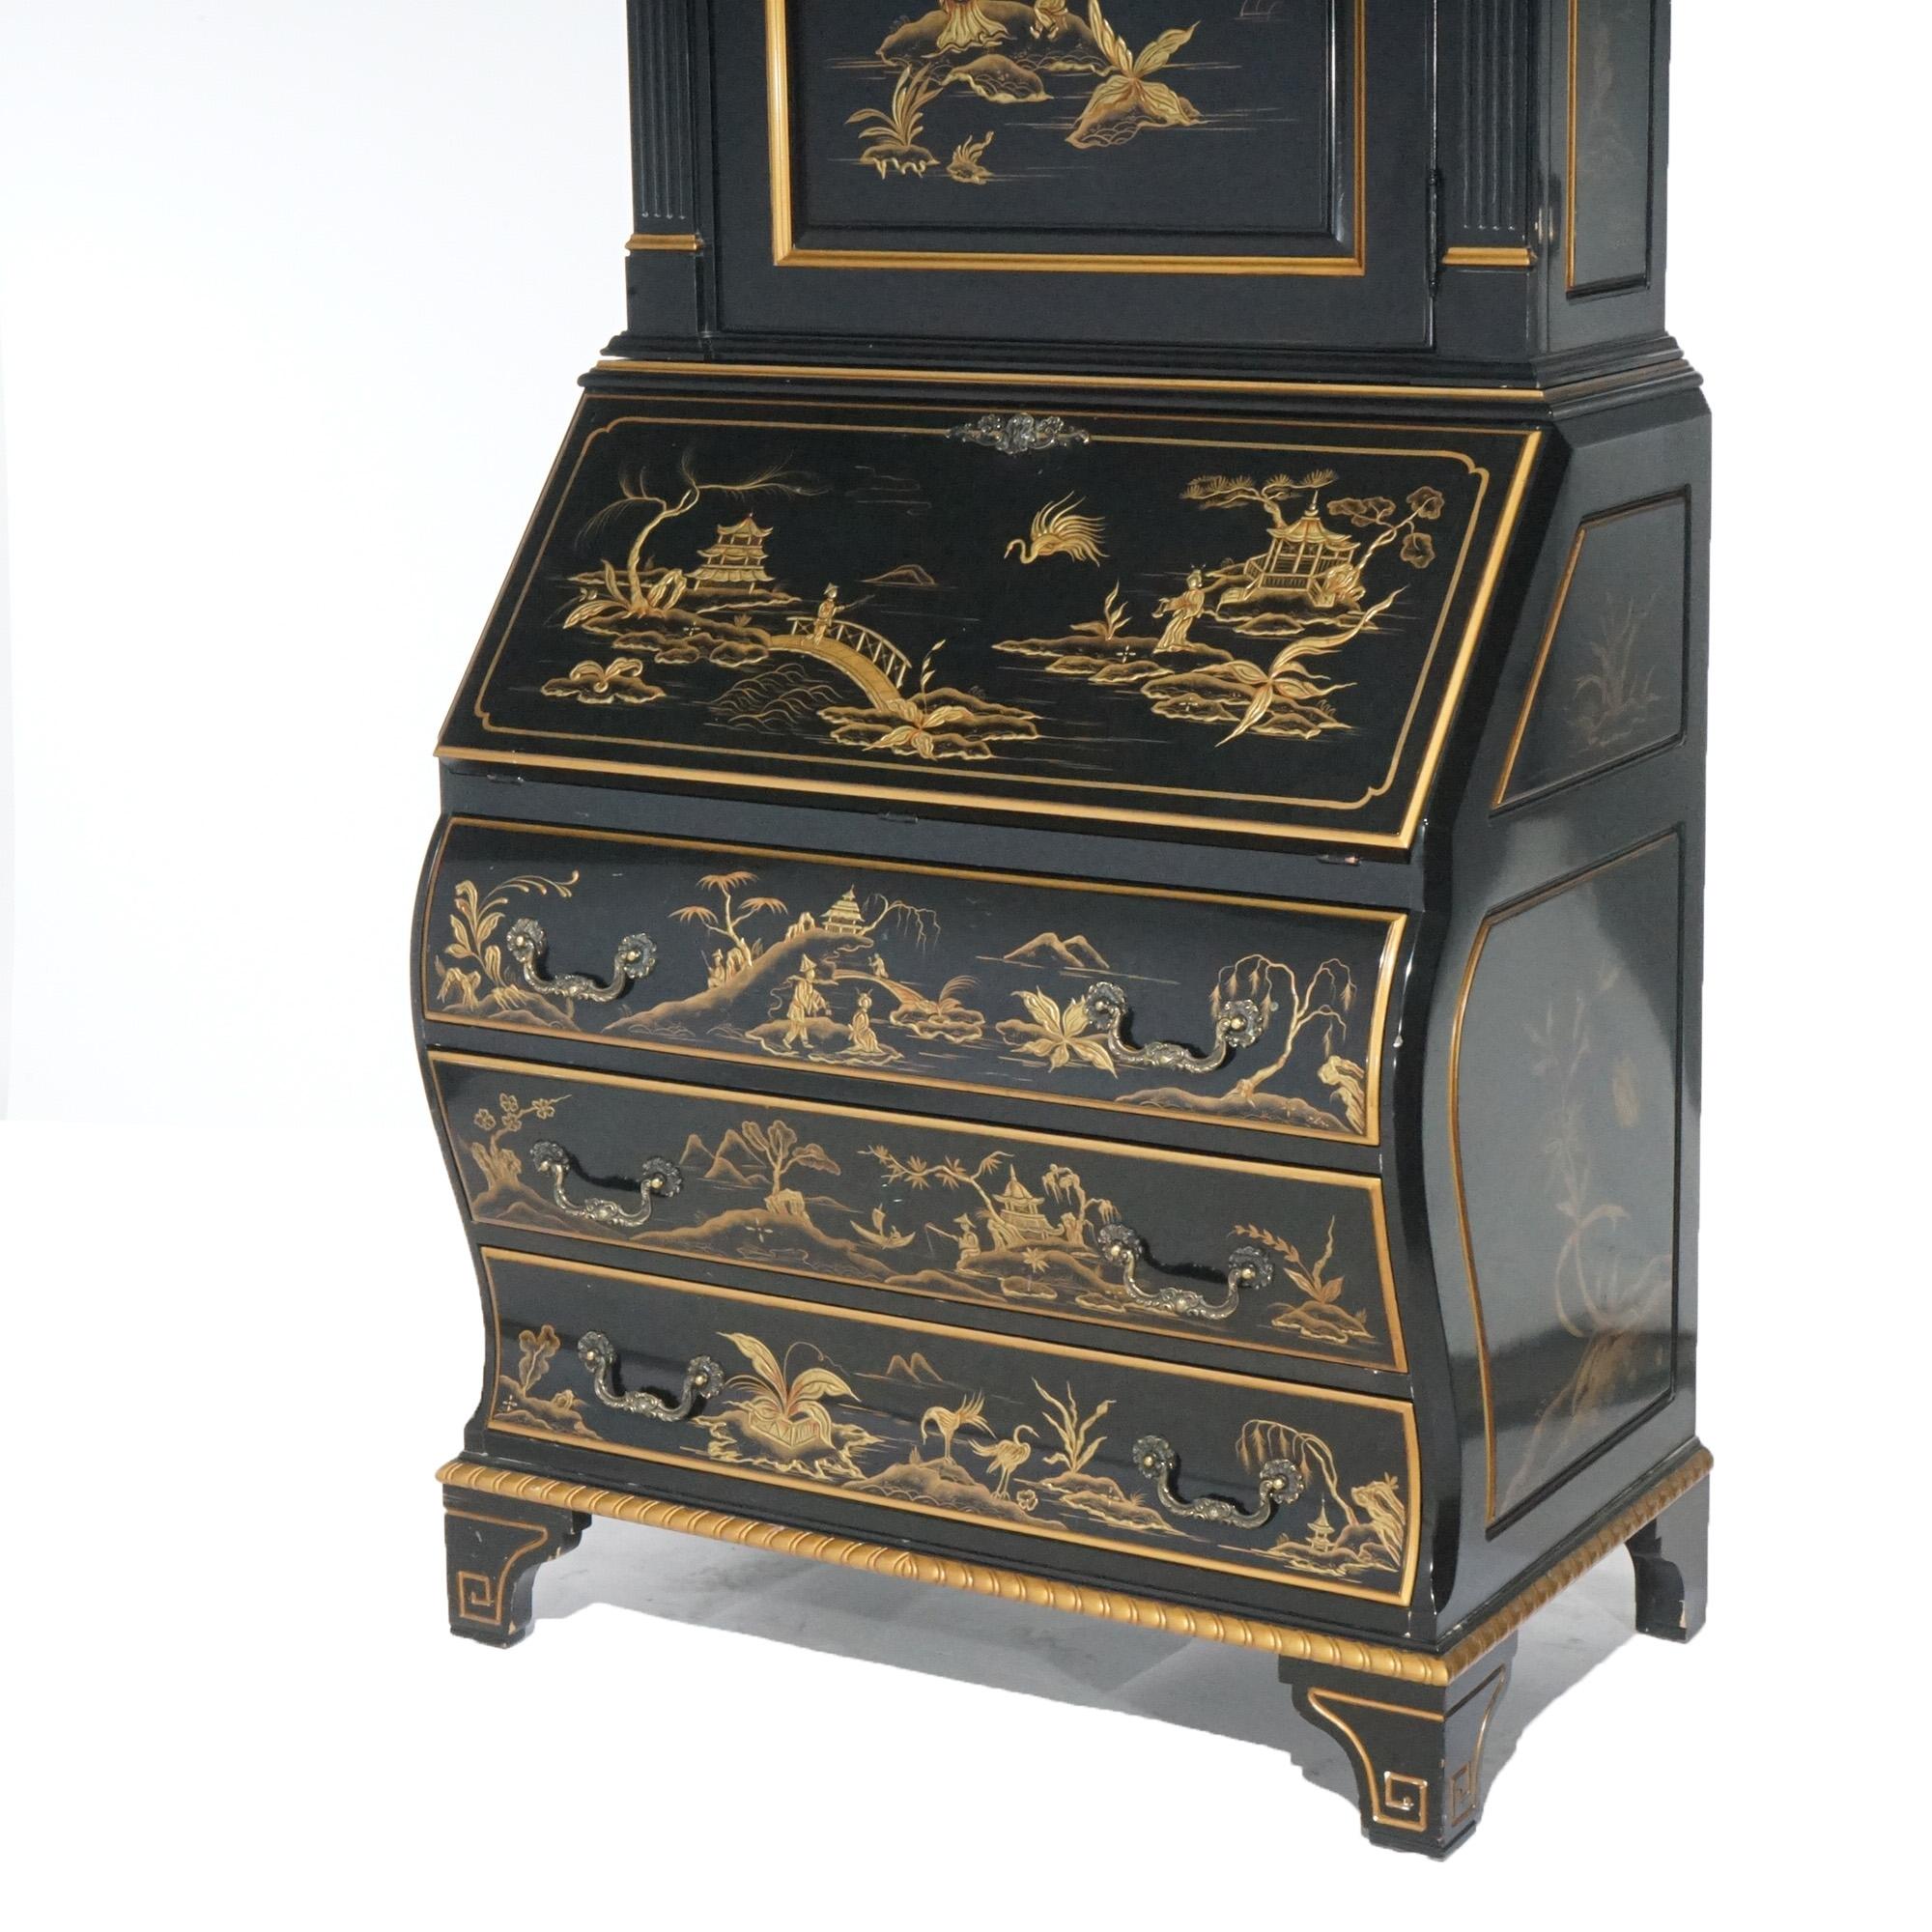 Karges Ebonized, Gilt & Chinoiserie Decorated Secretary Desk 20th Century For Sale 1